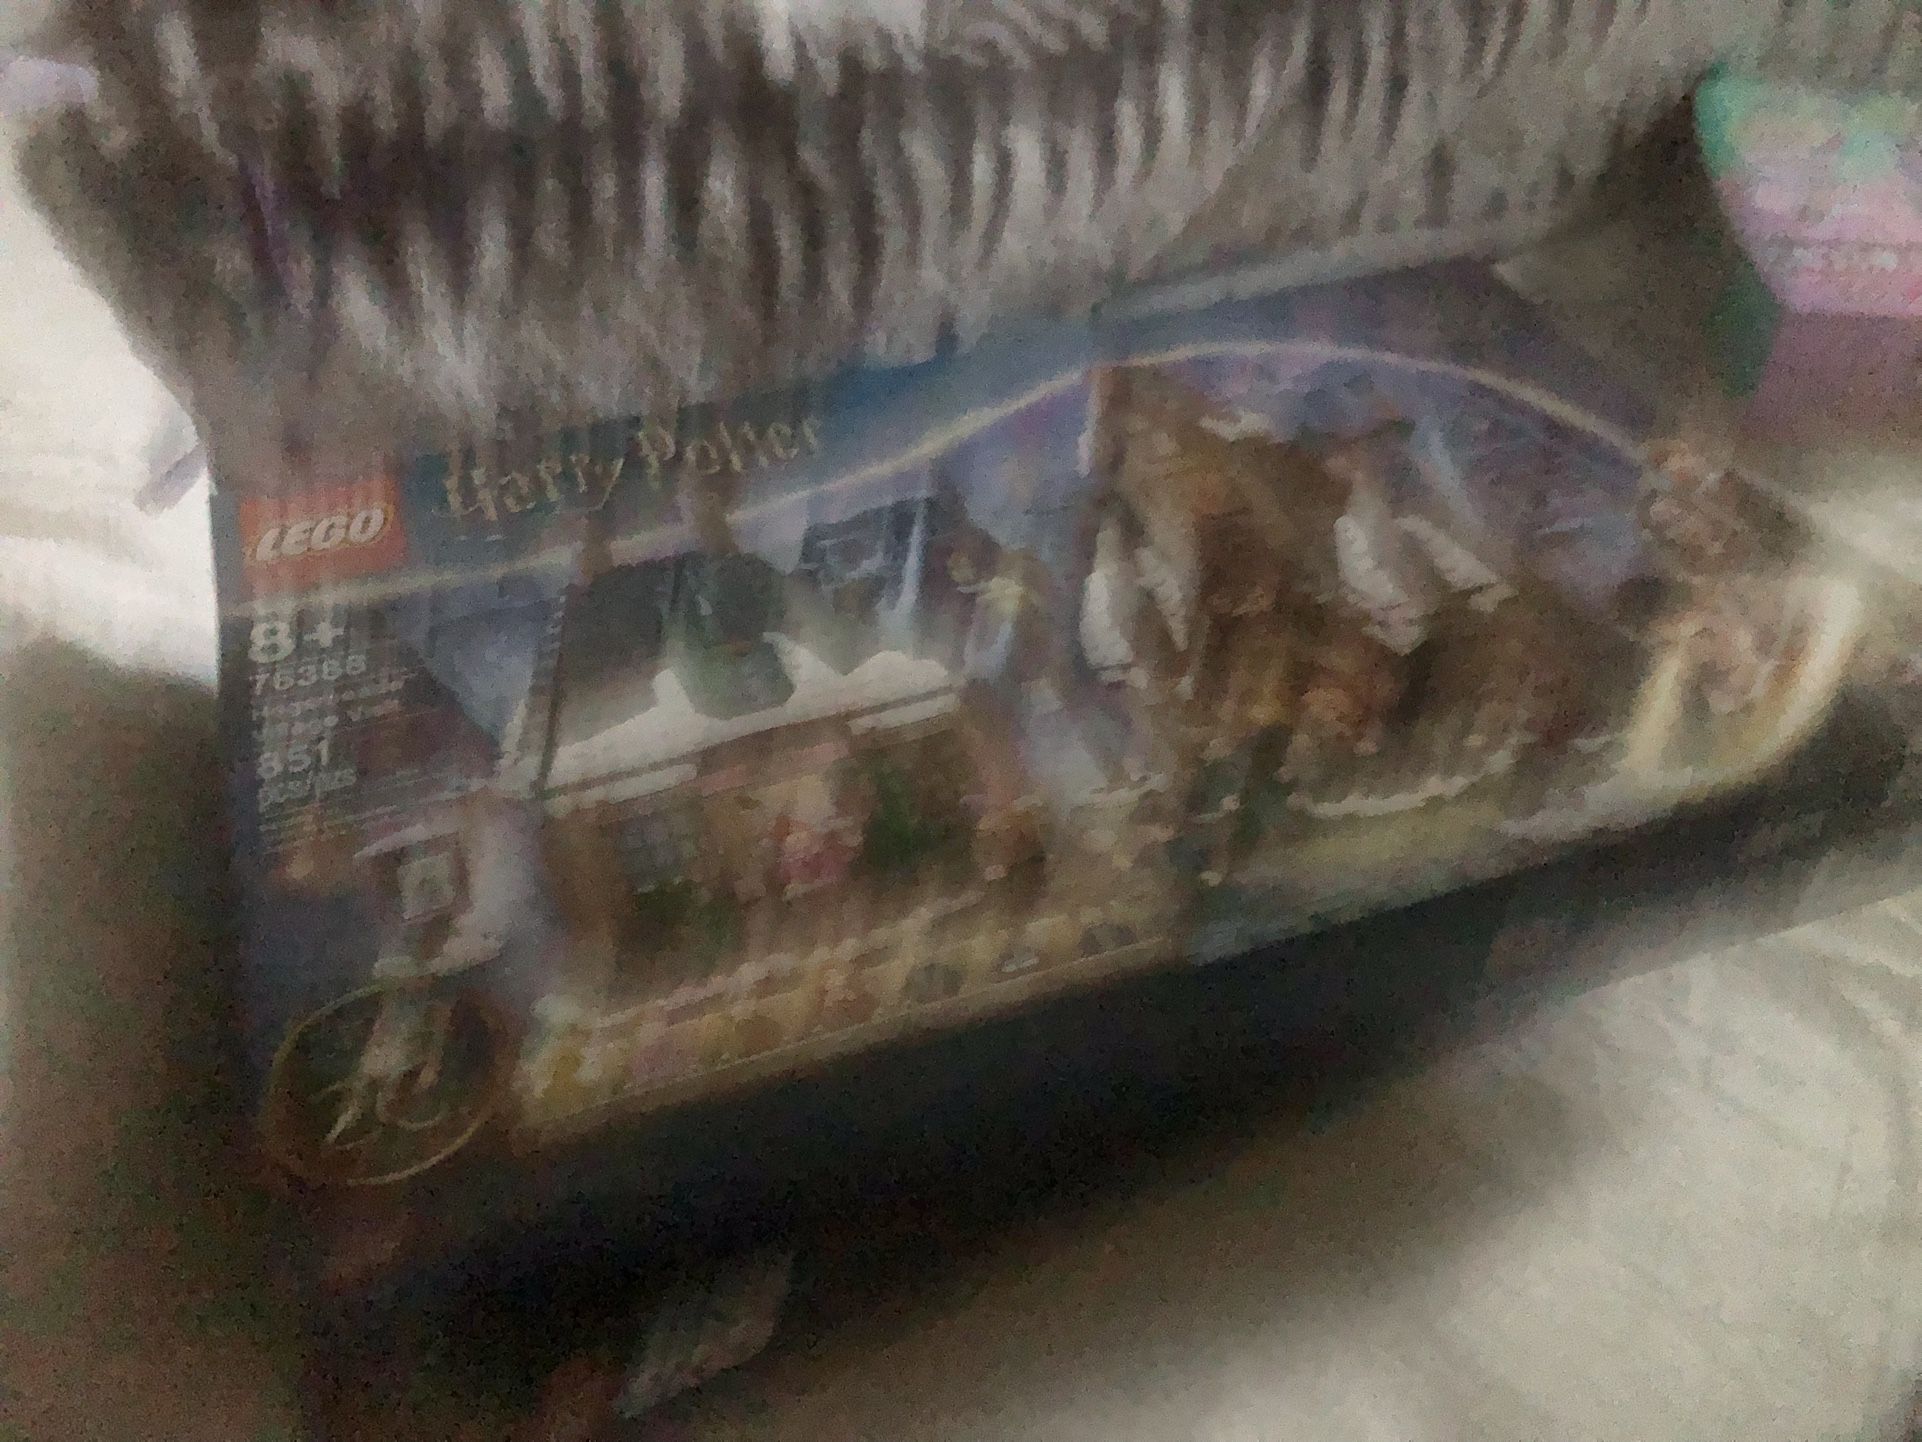 Harry Potter Hogsmeade Lego Set 